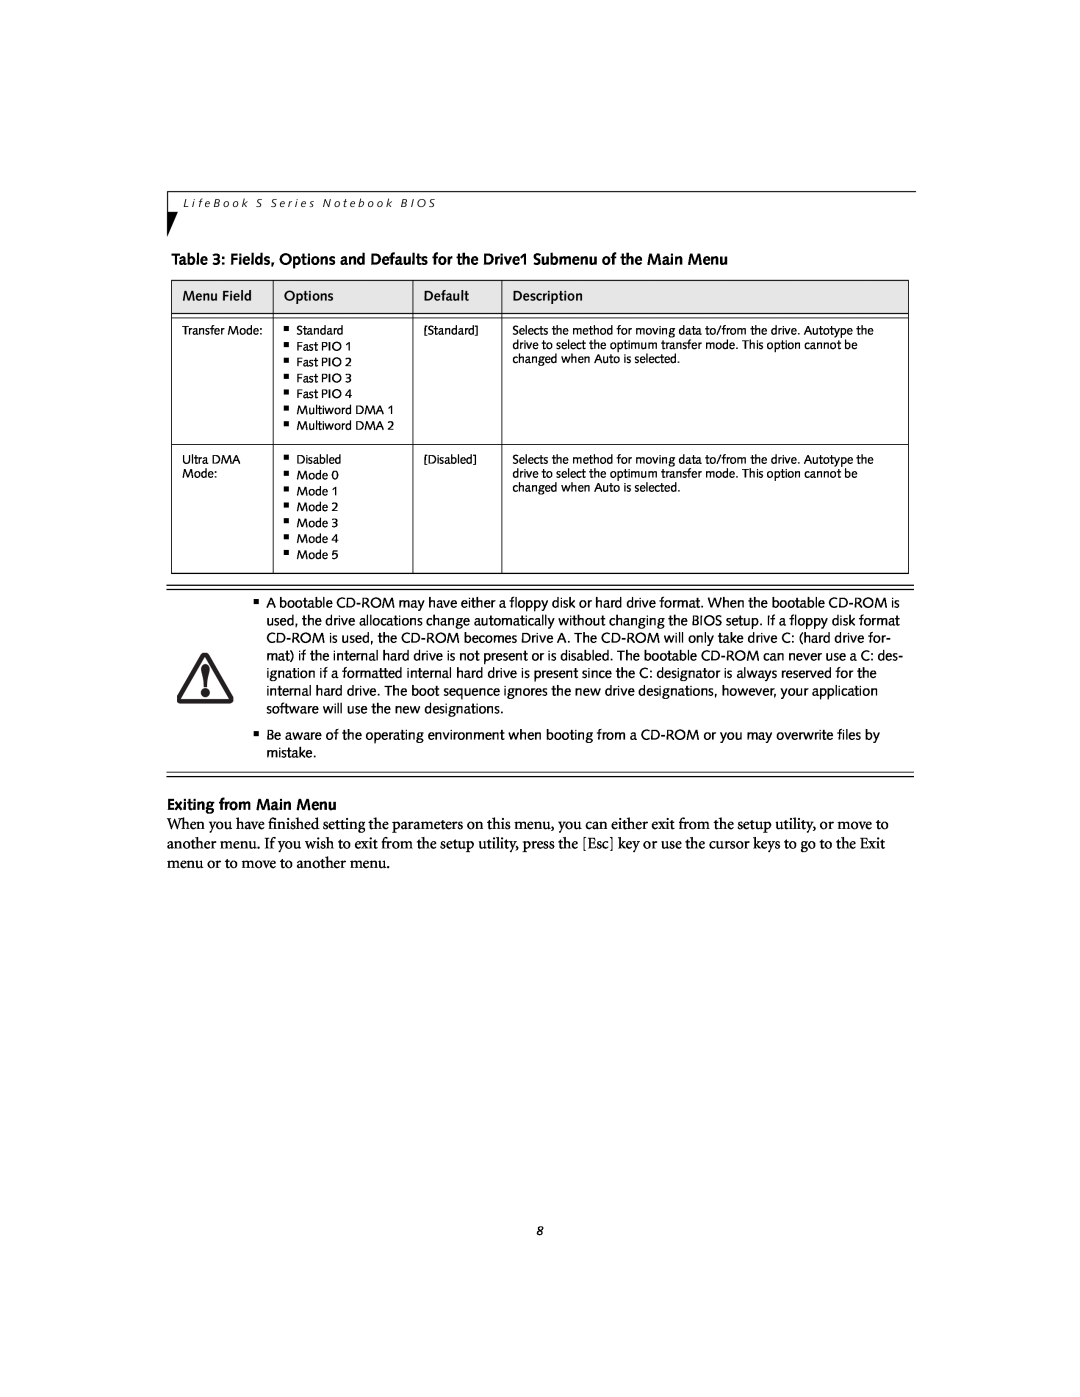 Fujitsu S7110 manual Exiting from Main Menu, Menu Field, Options, Default, Description 